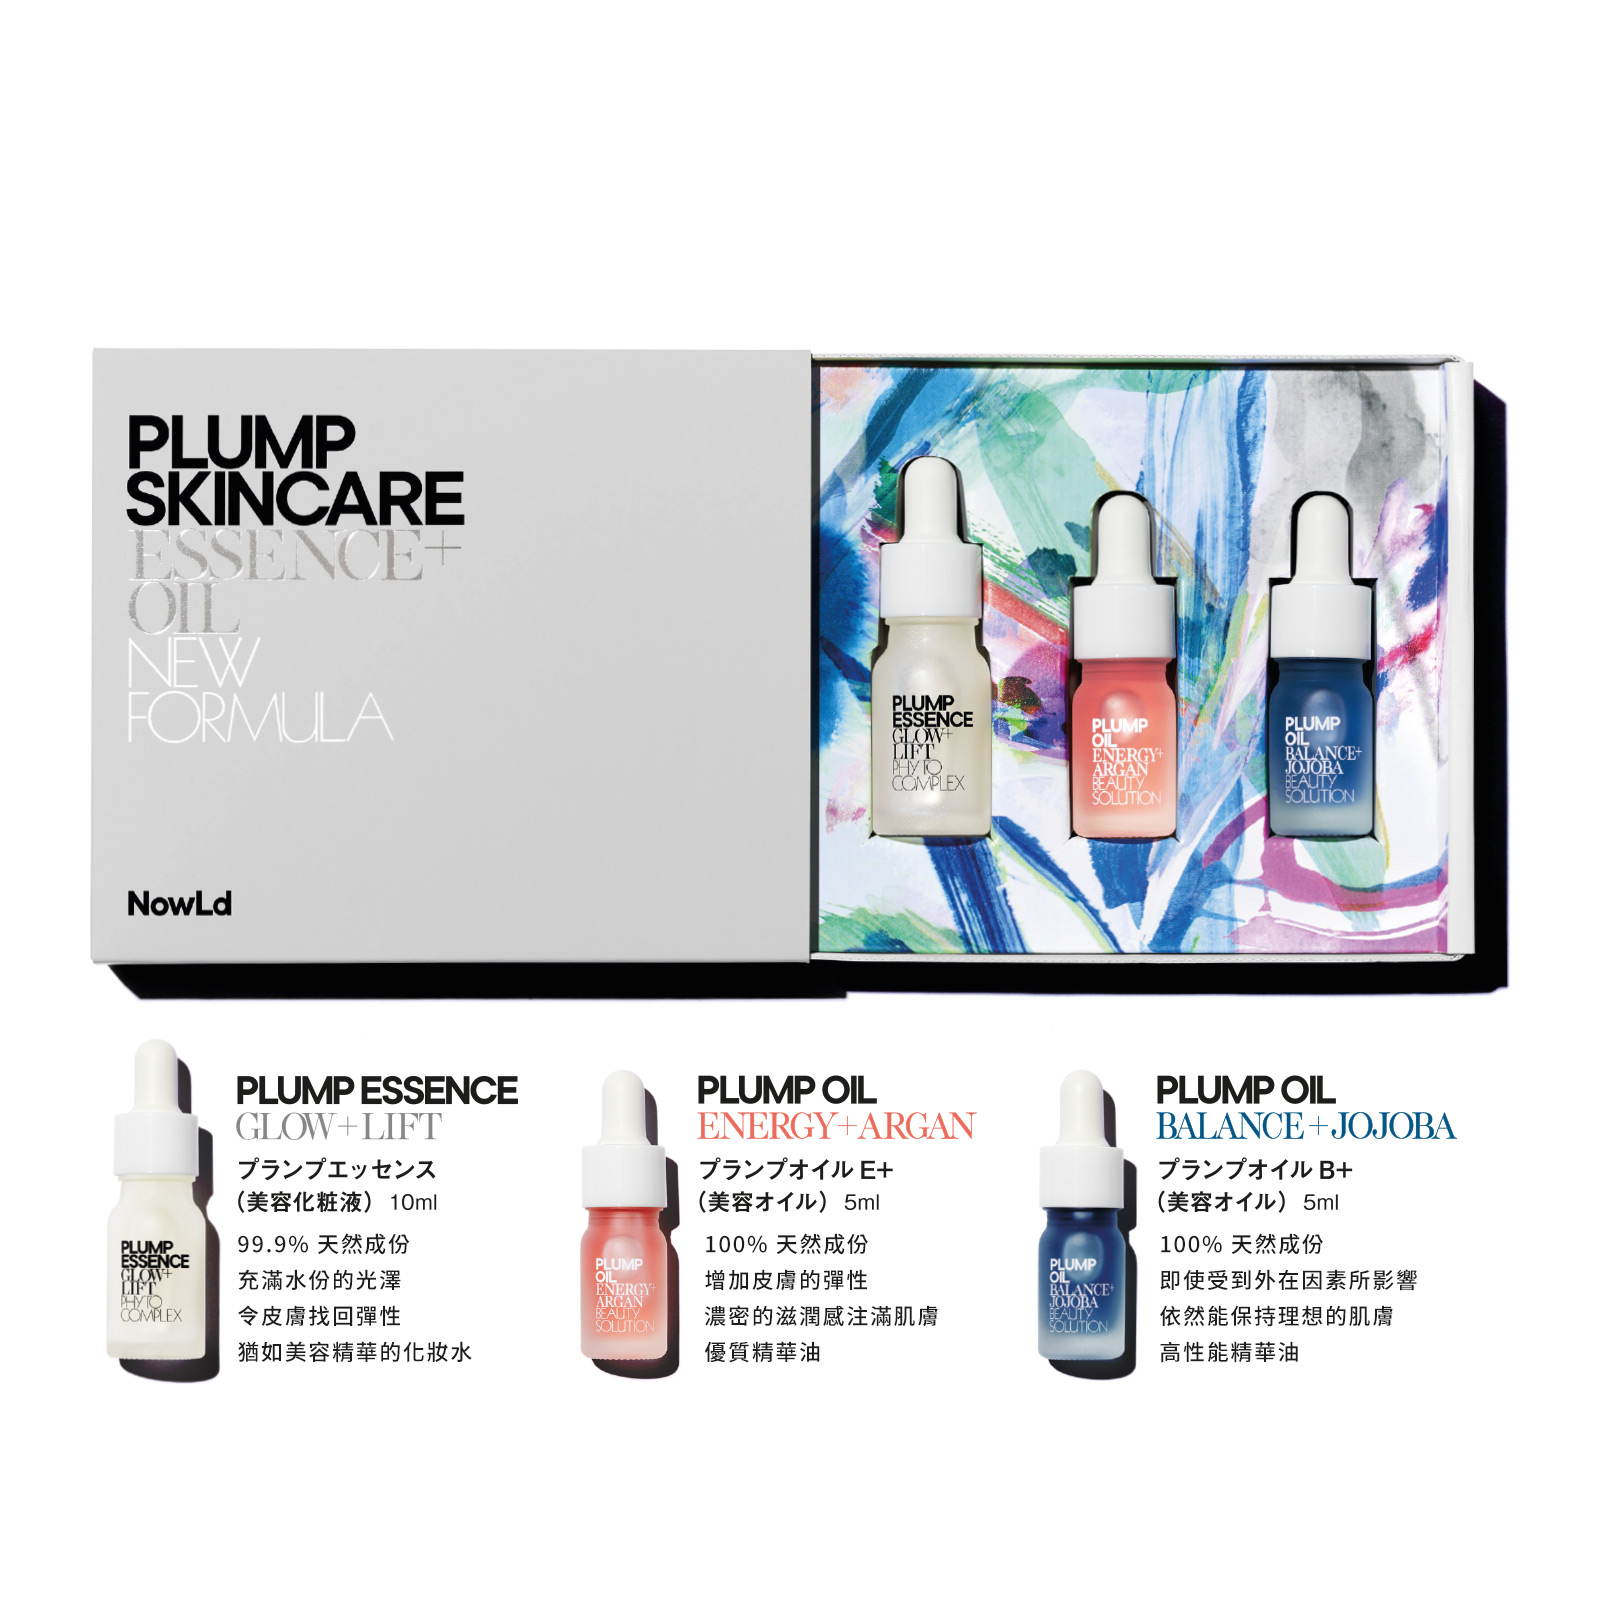 NowLd｜Plump Skin Trial Kit (限量版)｜Product Shot